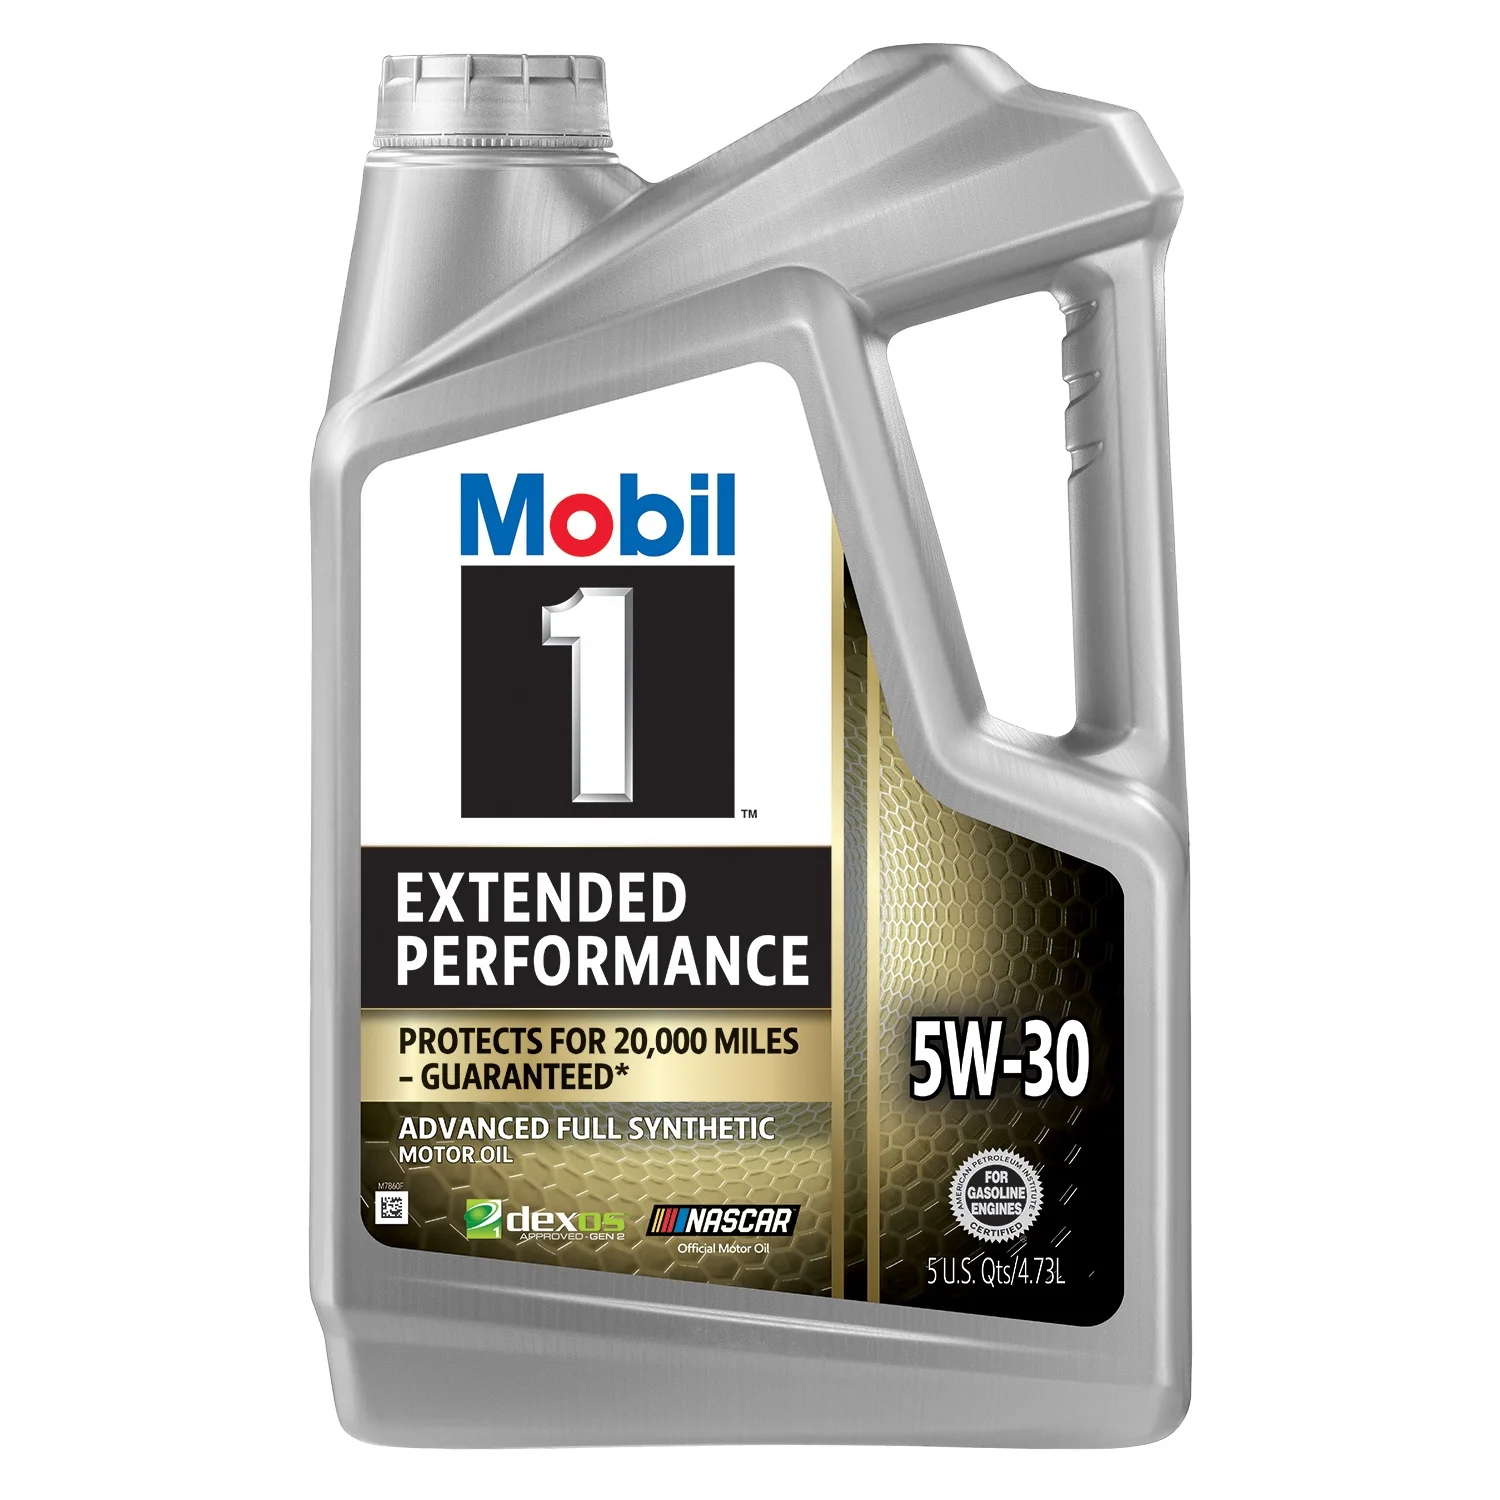 móvil 1 5W30 Extended Performance Synthetic Motor Oil – 5 Quart (Pack of 3)